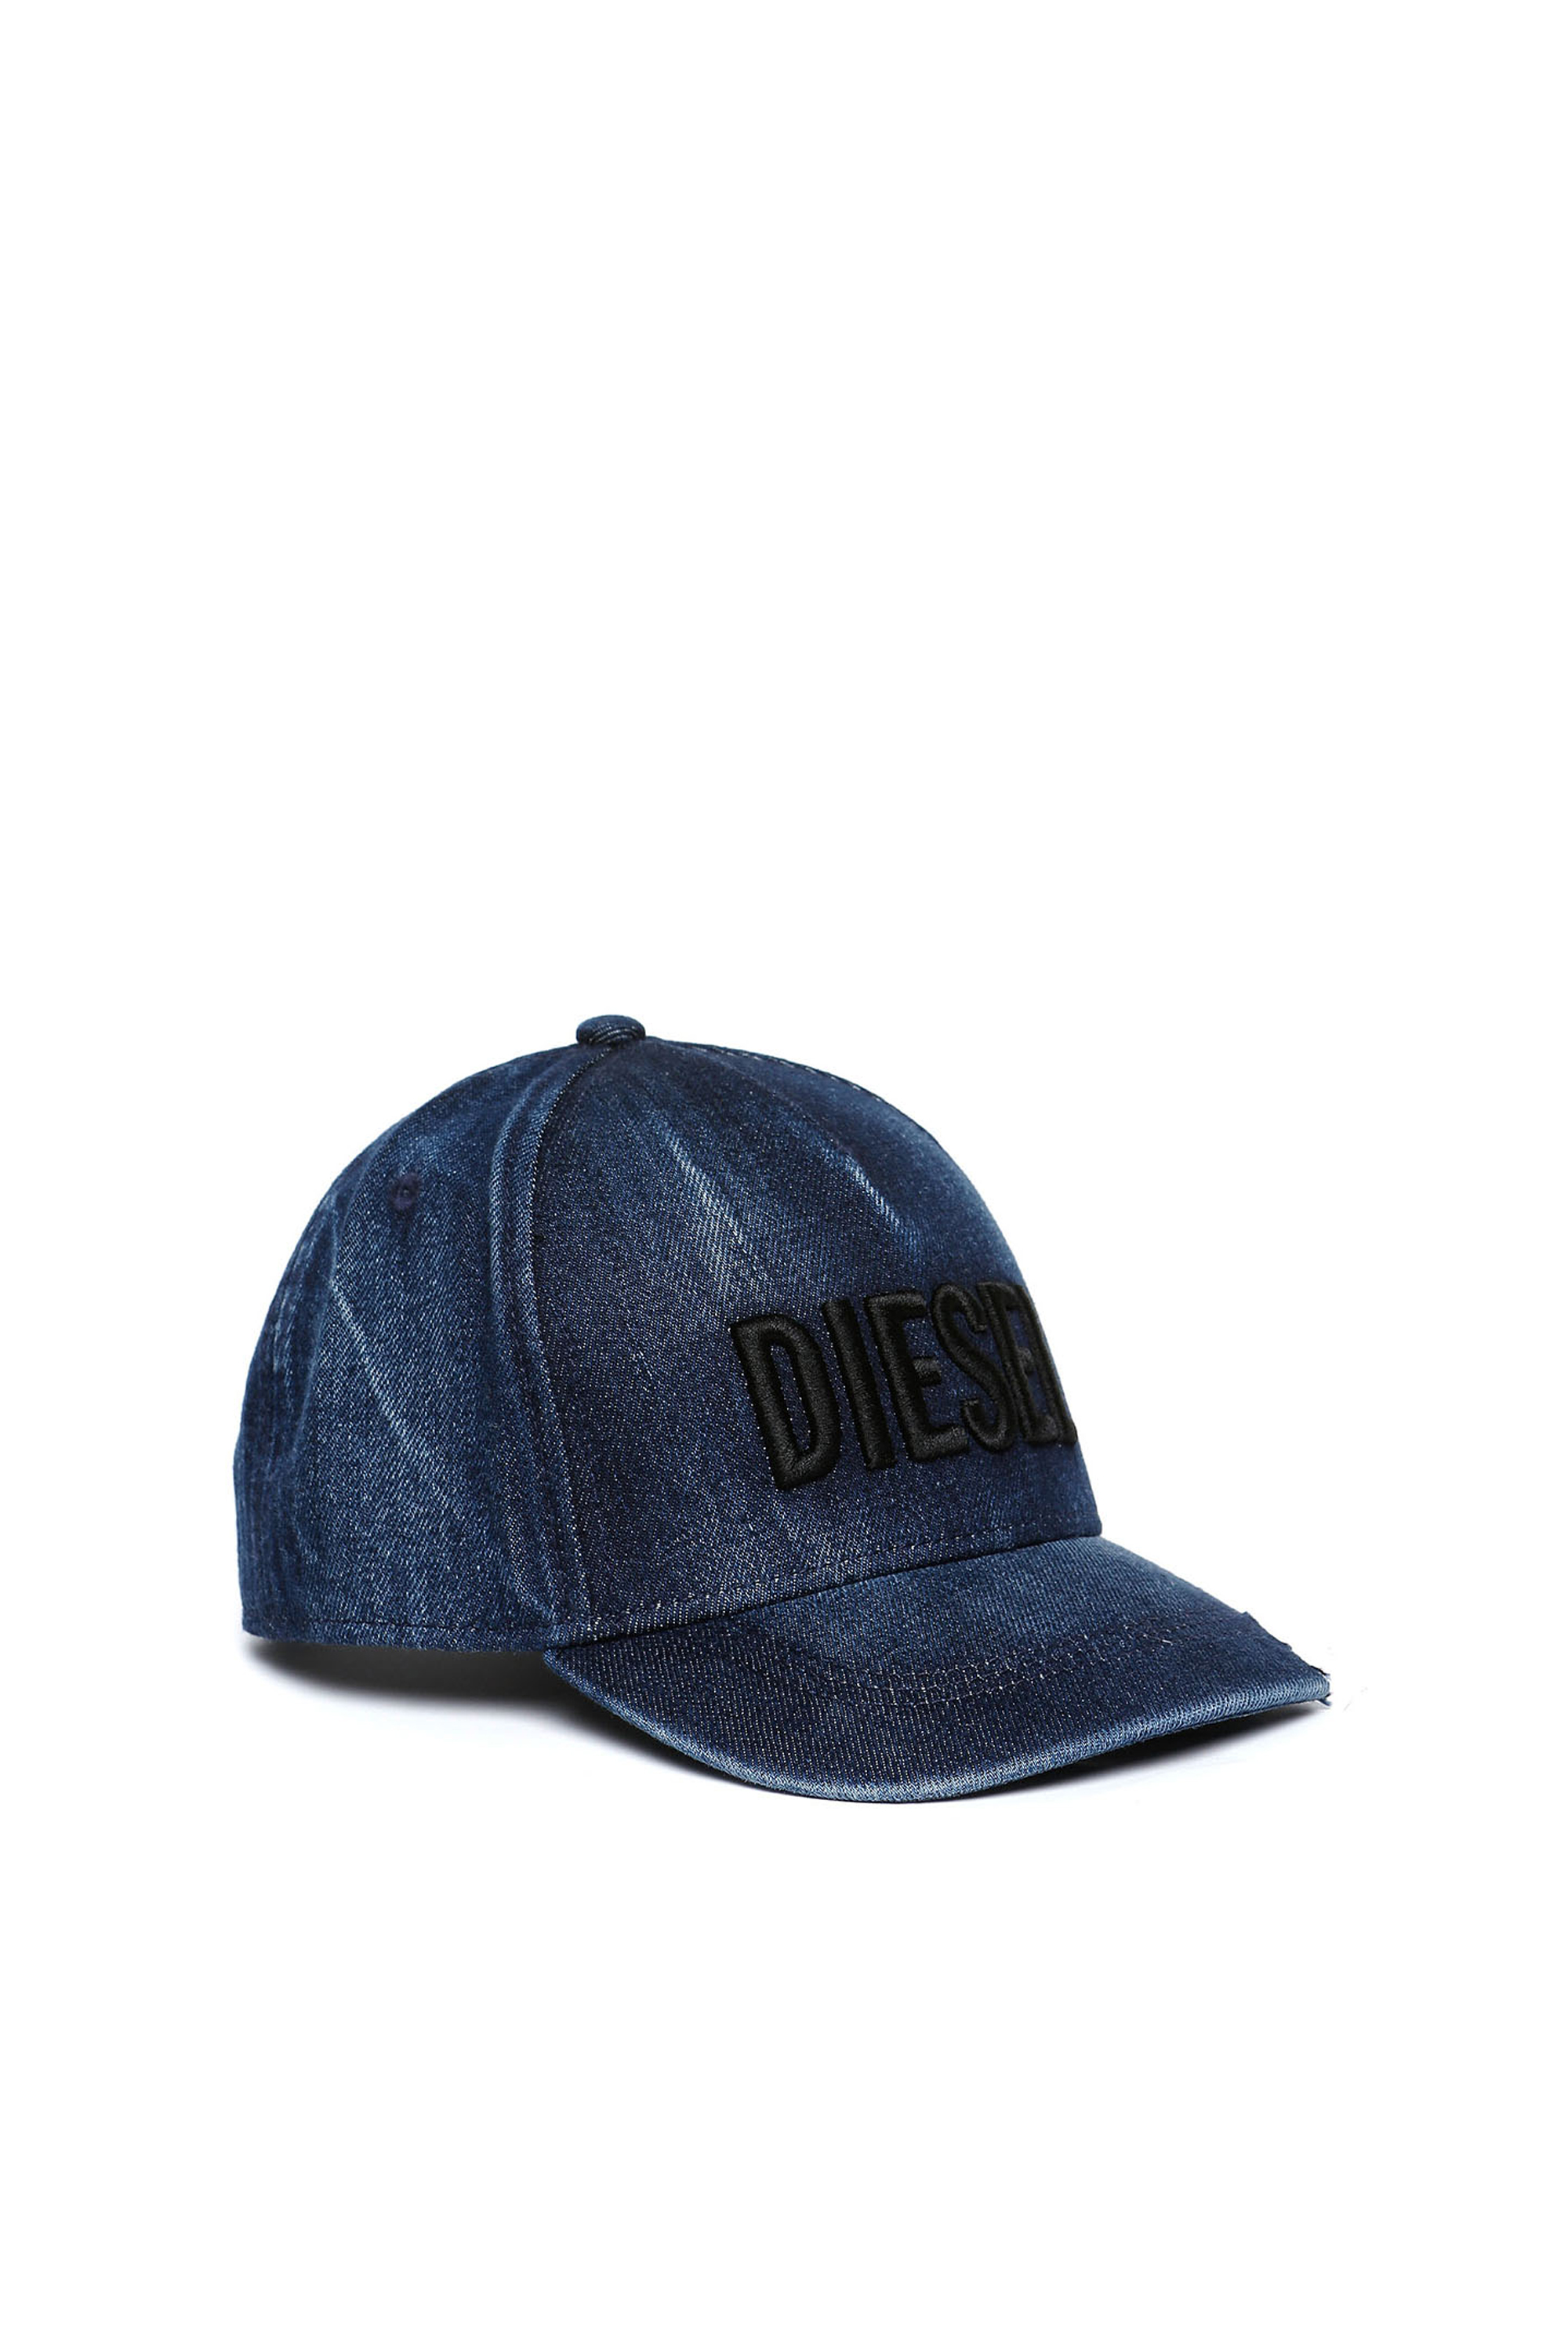 Diesel - FBETY, Bleu - Image 1